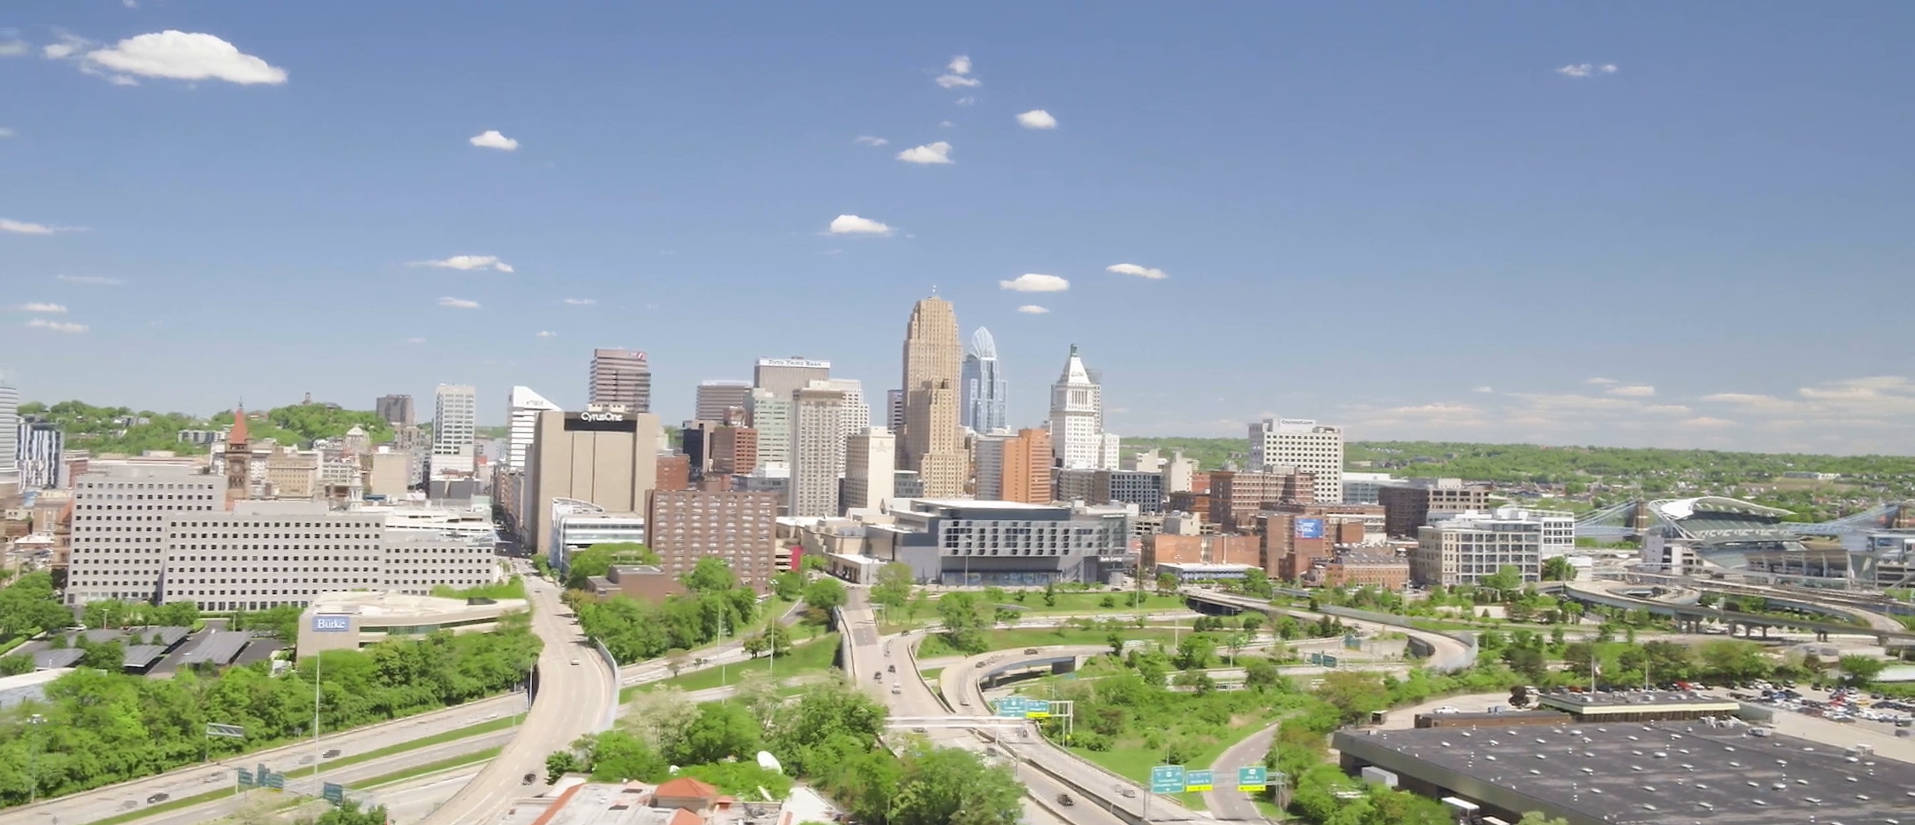 Downtown Cincinnati Ohio Aerial View Background